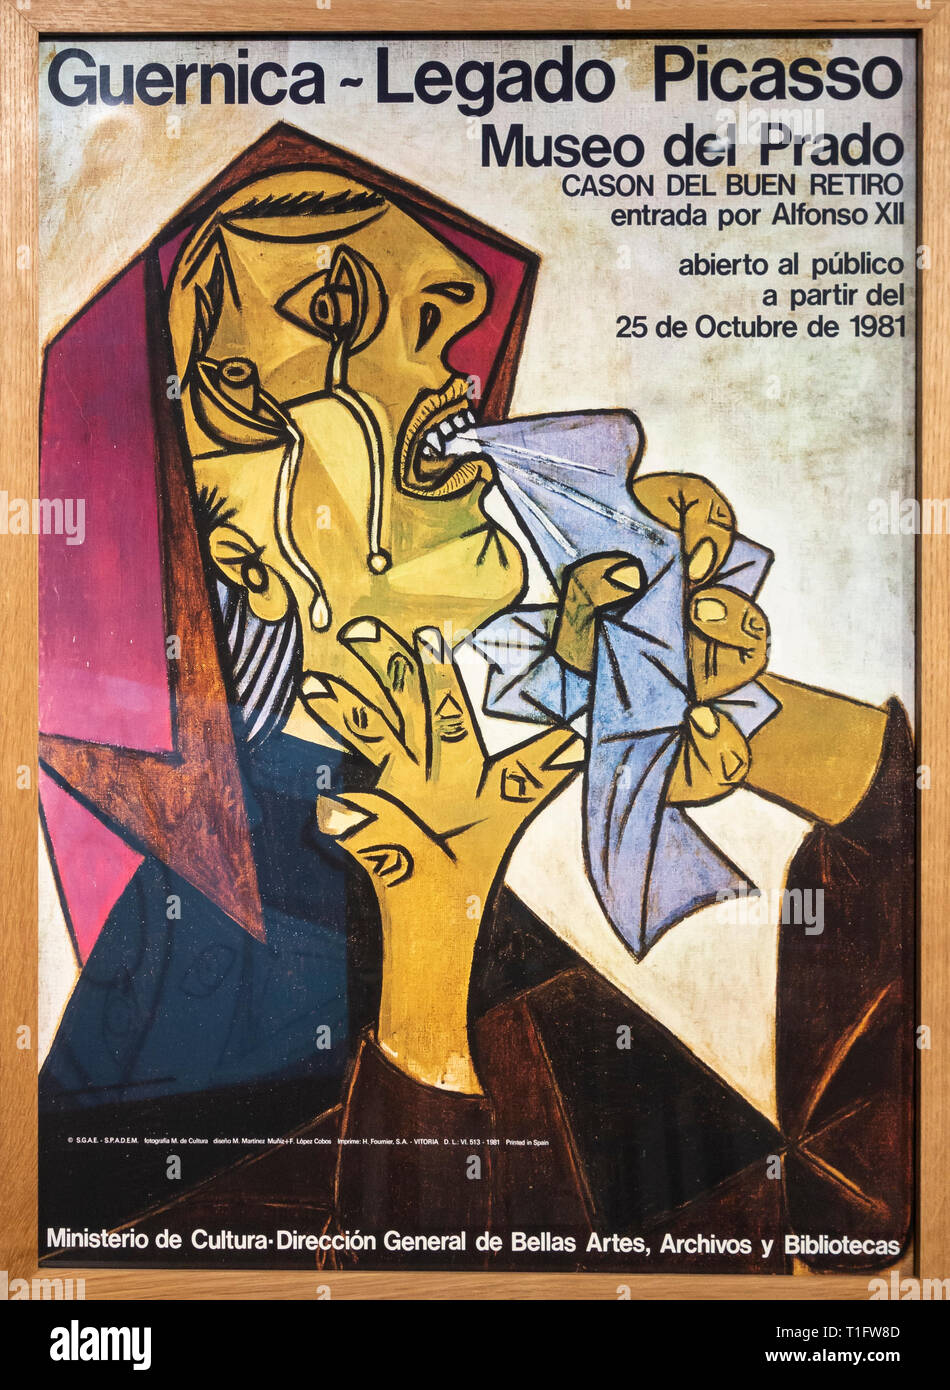 Picasso Guernica exhibition poster, Prado museum, Madrid, Spain.1981. Stock Photo